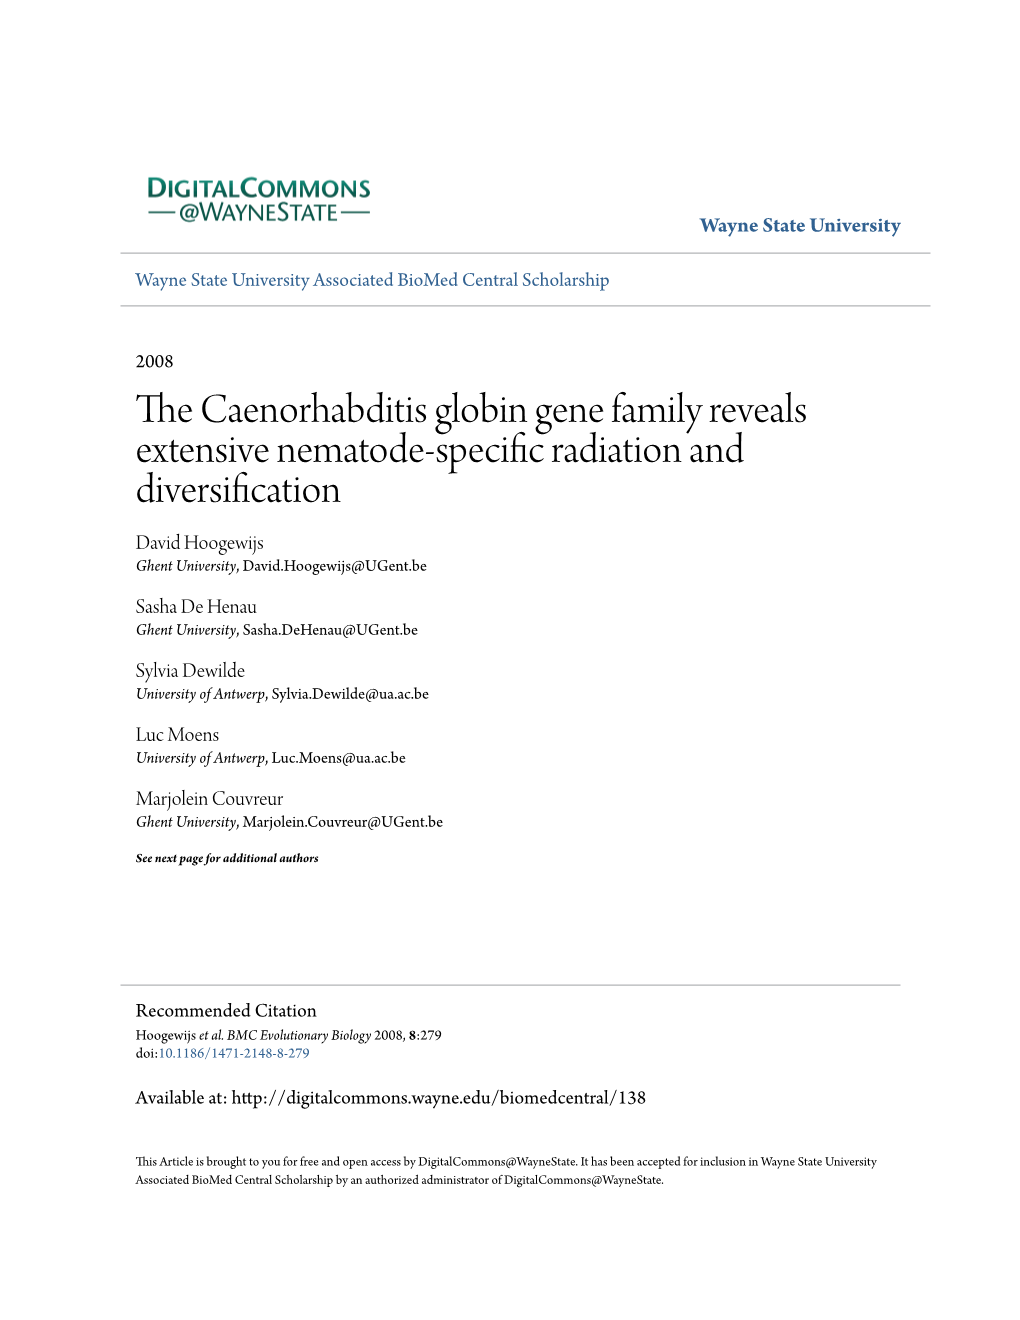 The Caenorhabditis Globin Gene Family Reveals Extensive Nematode